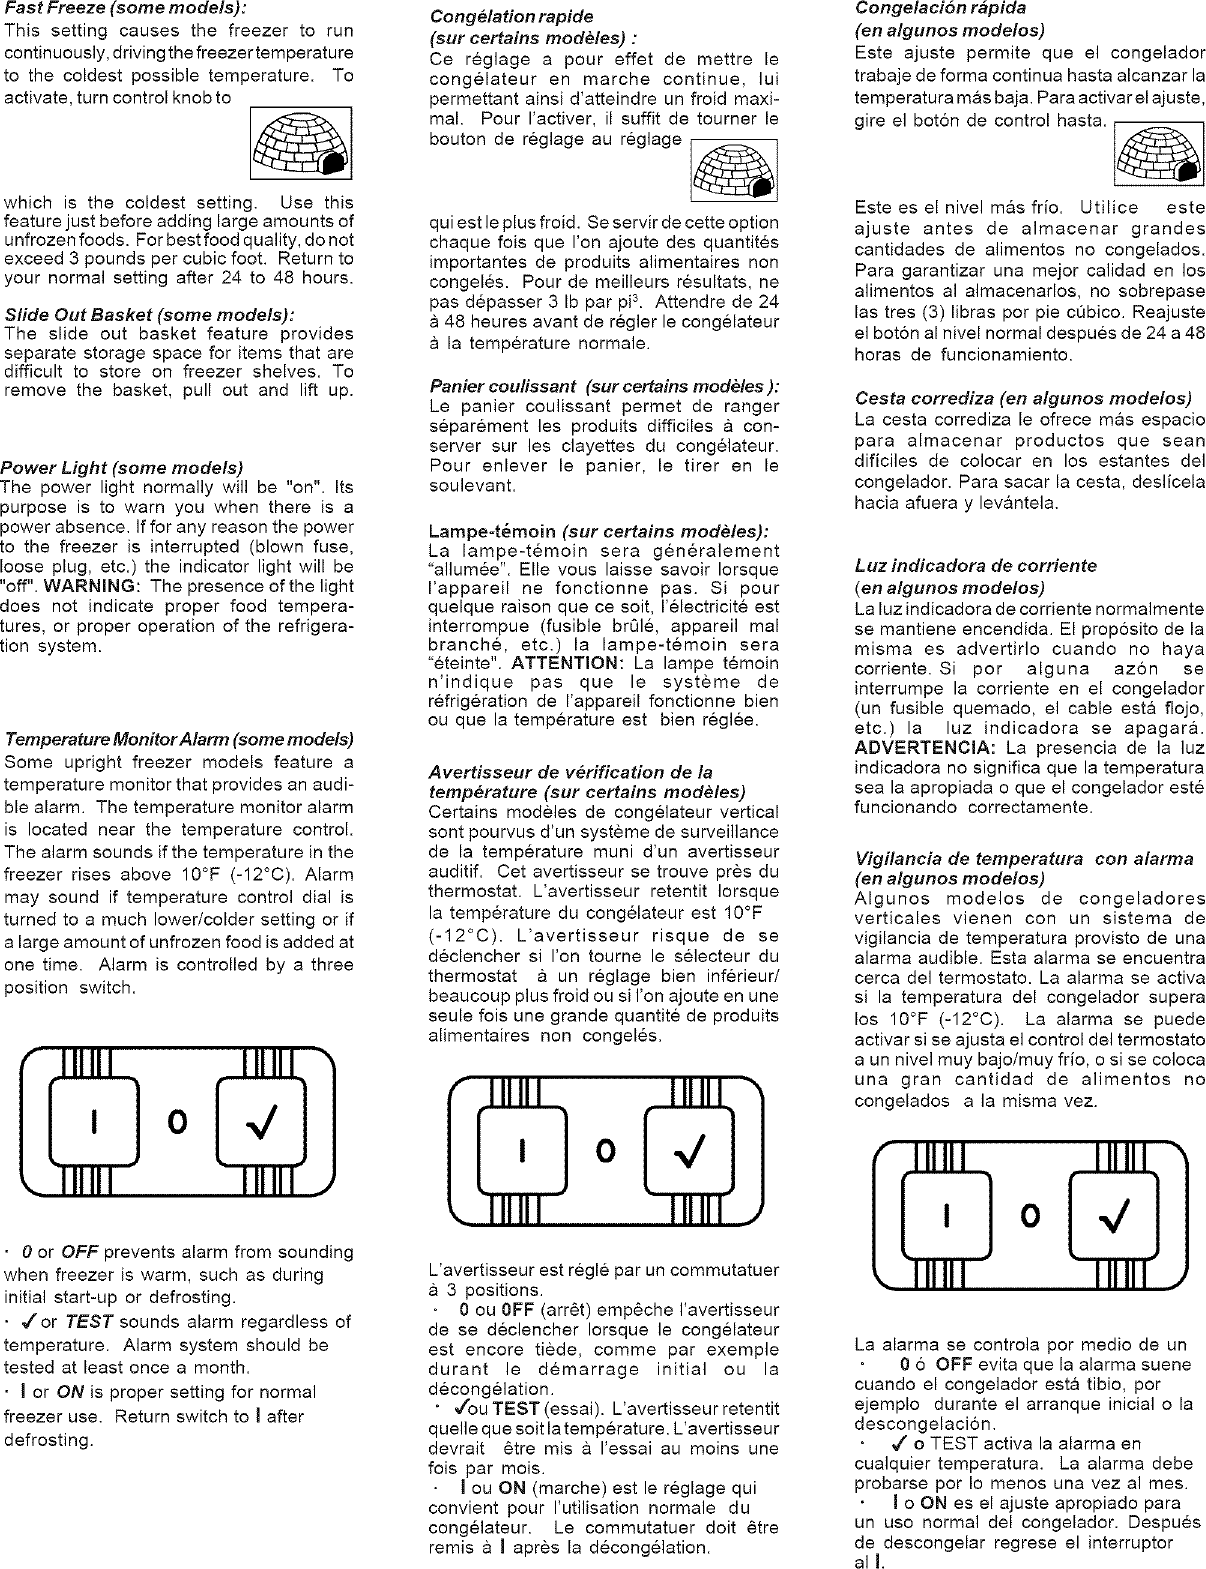 Page 4 of 7 - WC  WOOD Upright Freezer Manual L0709284